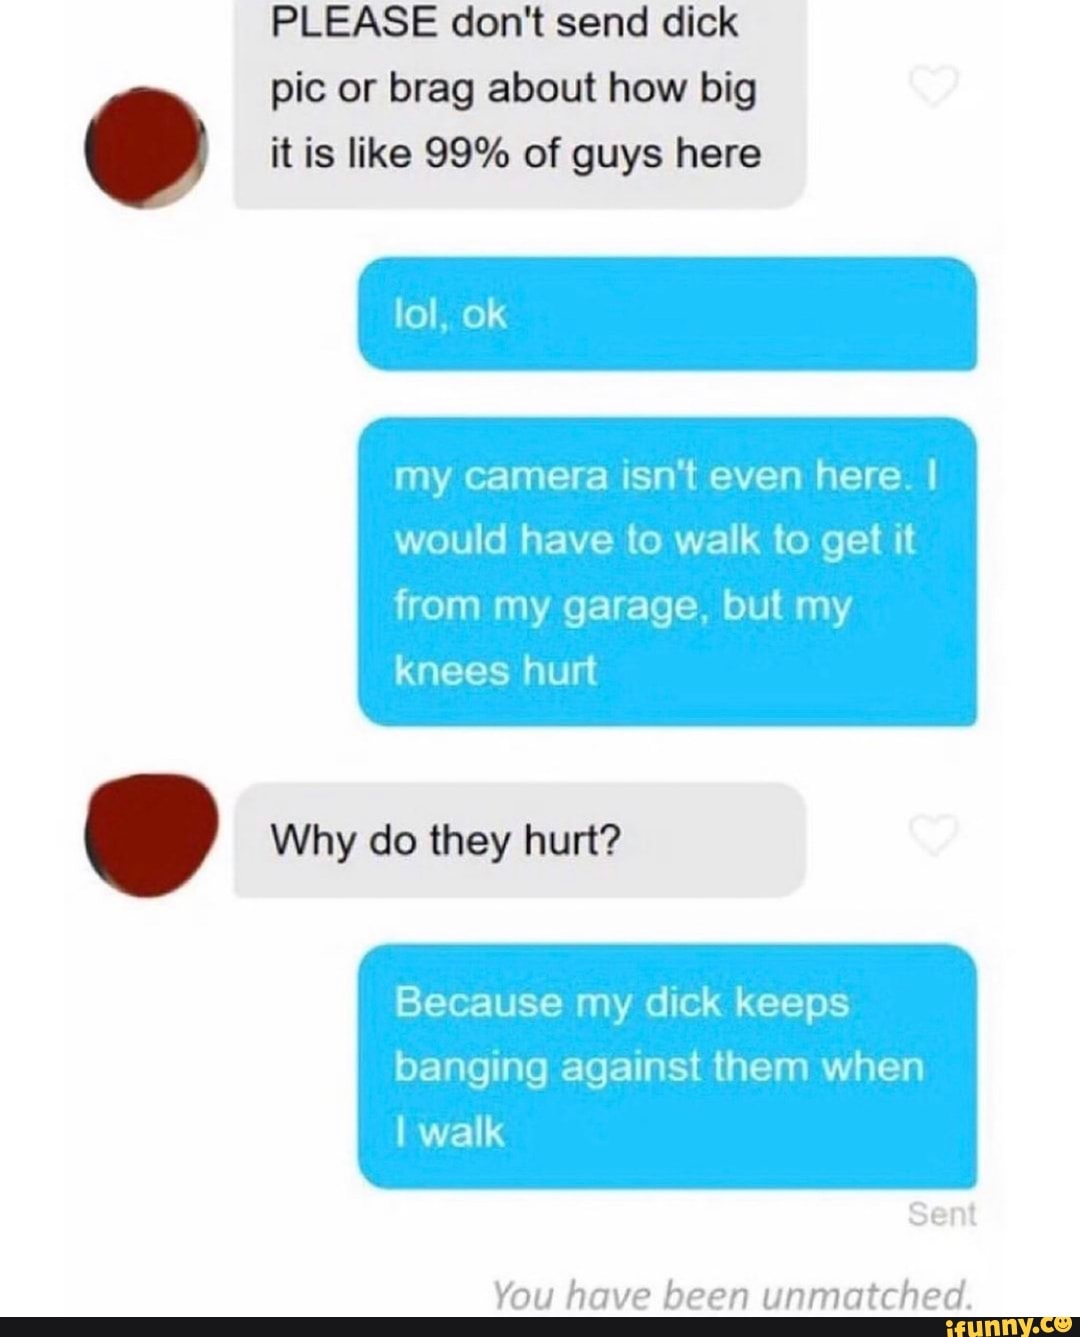 How do guys send dirty non dick pics